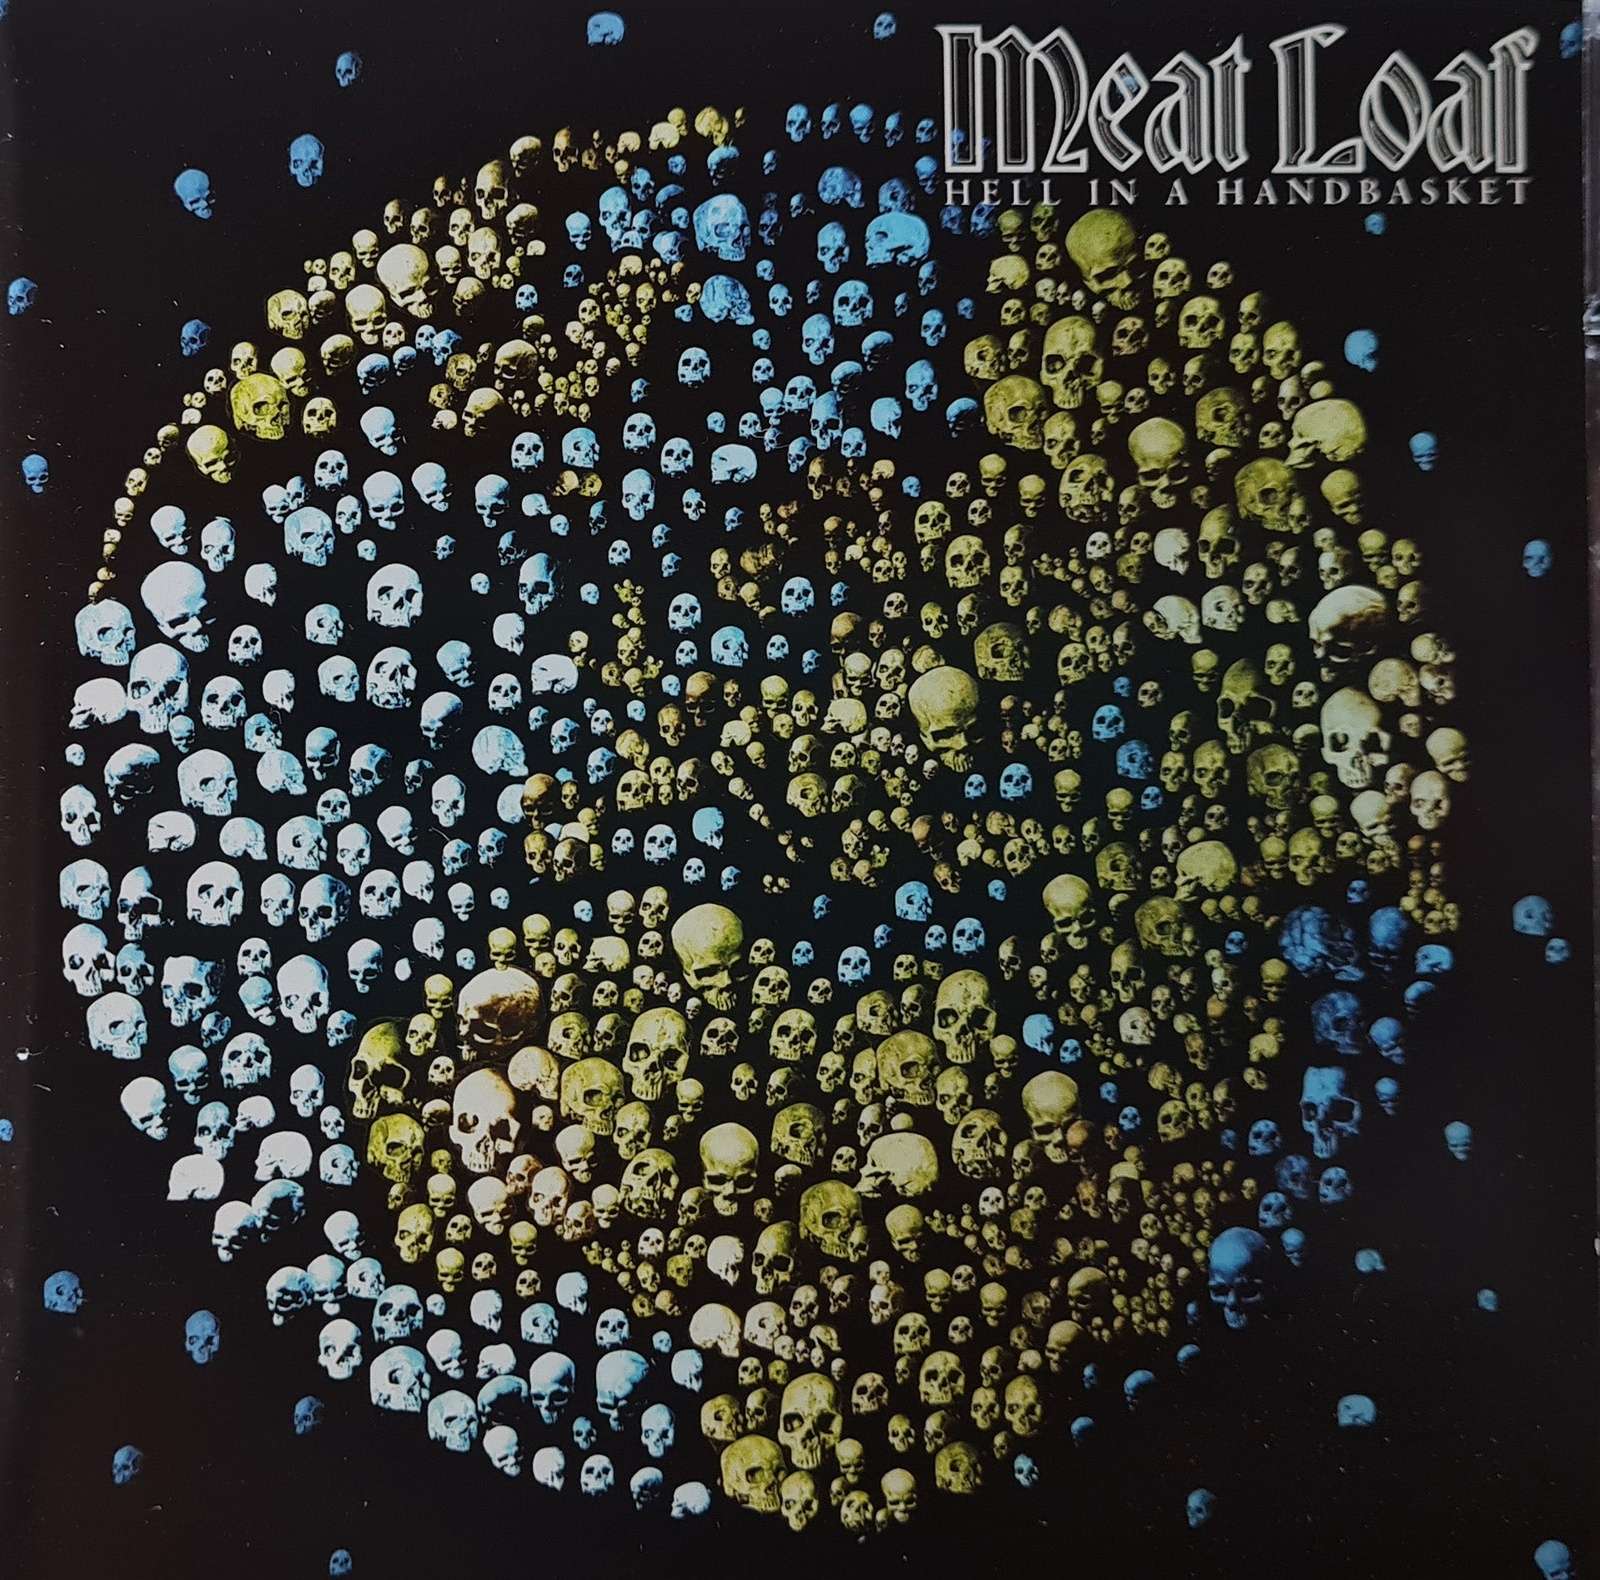 Meat Loaf - Hell in a Handbasket (CD)